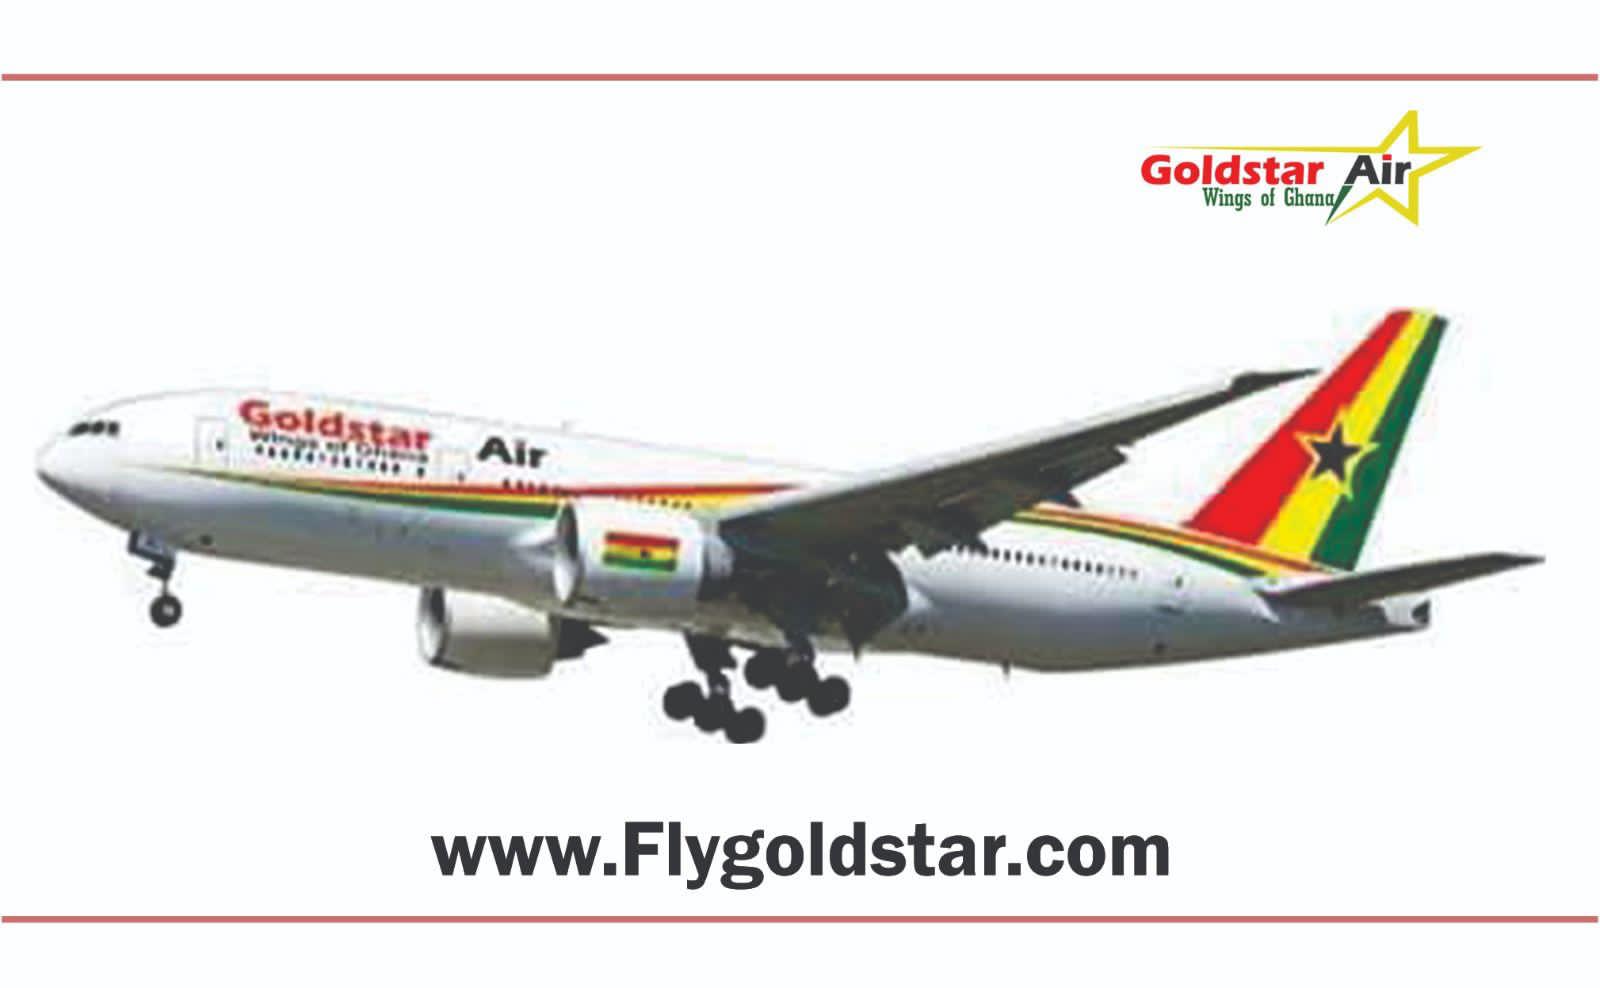 Goldstar Air to enhance cargo movement  in Africa under AfCTA